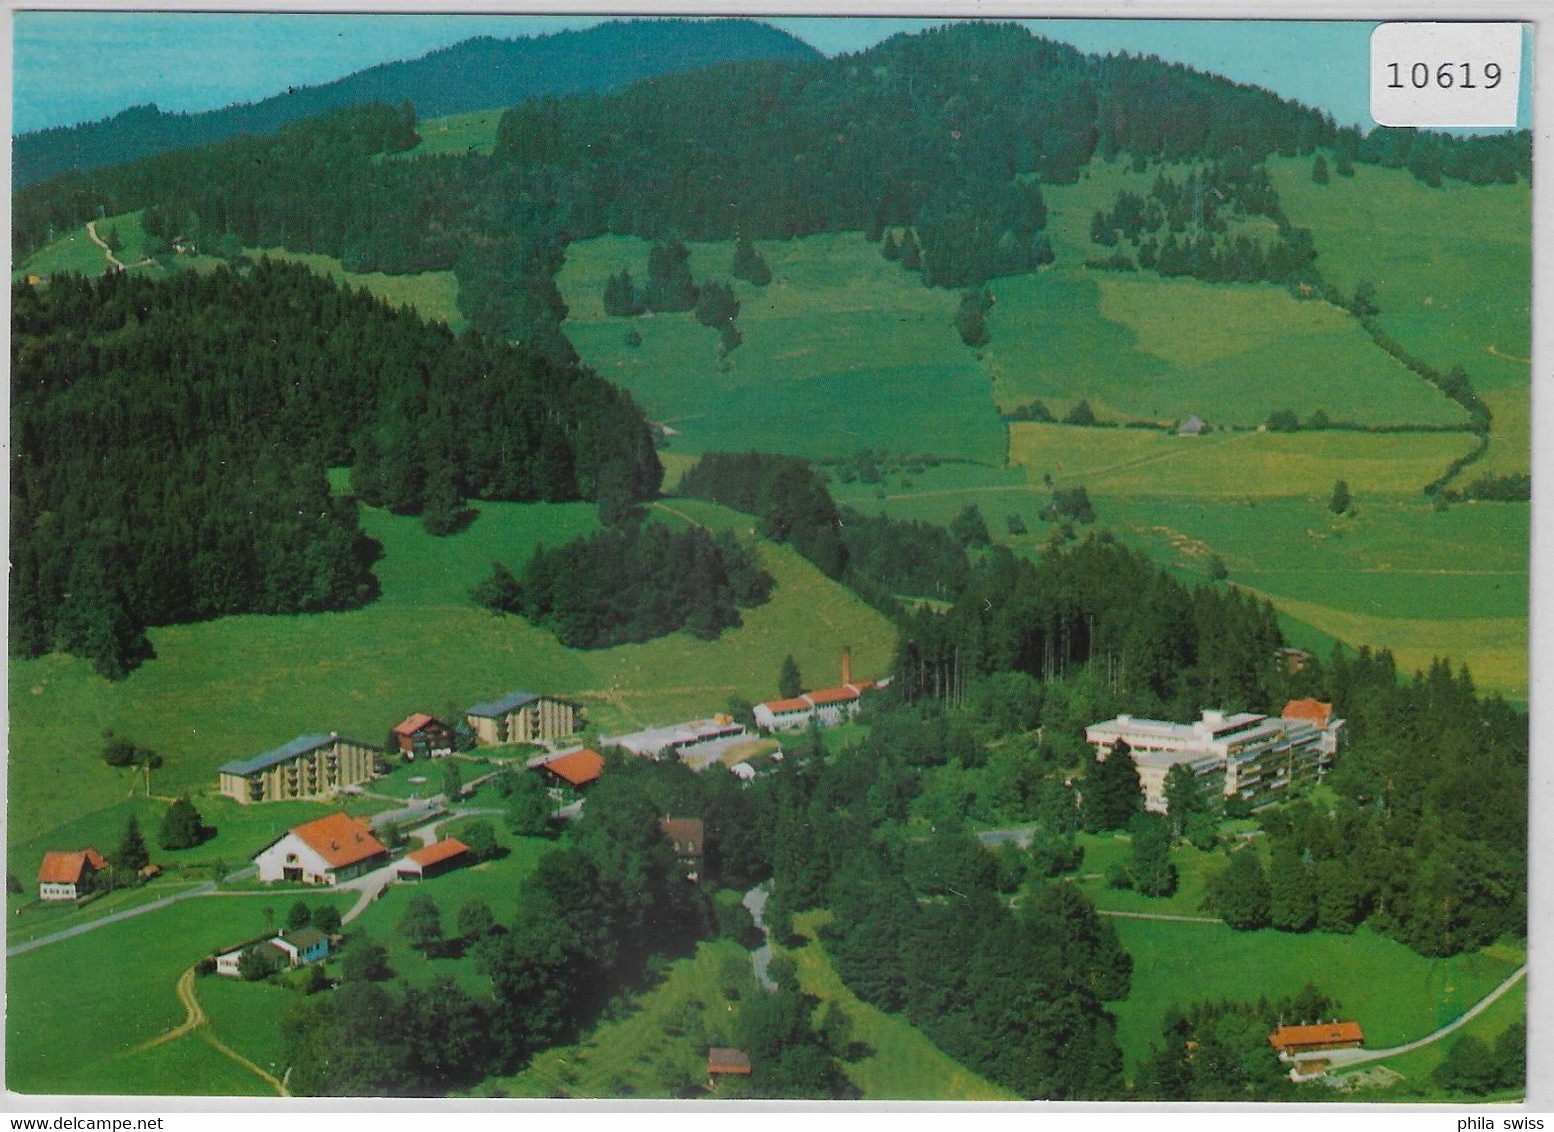 Flugaufnahme Faltigberg - Zürcher Höhenklinik Wald ZH - Wald